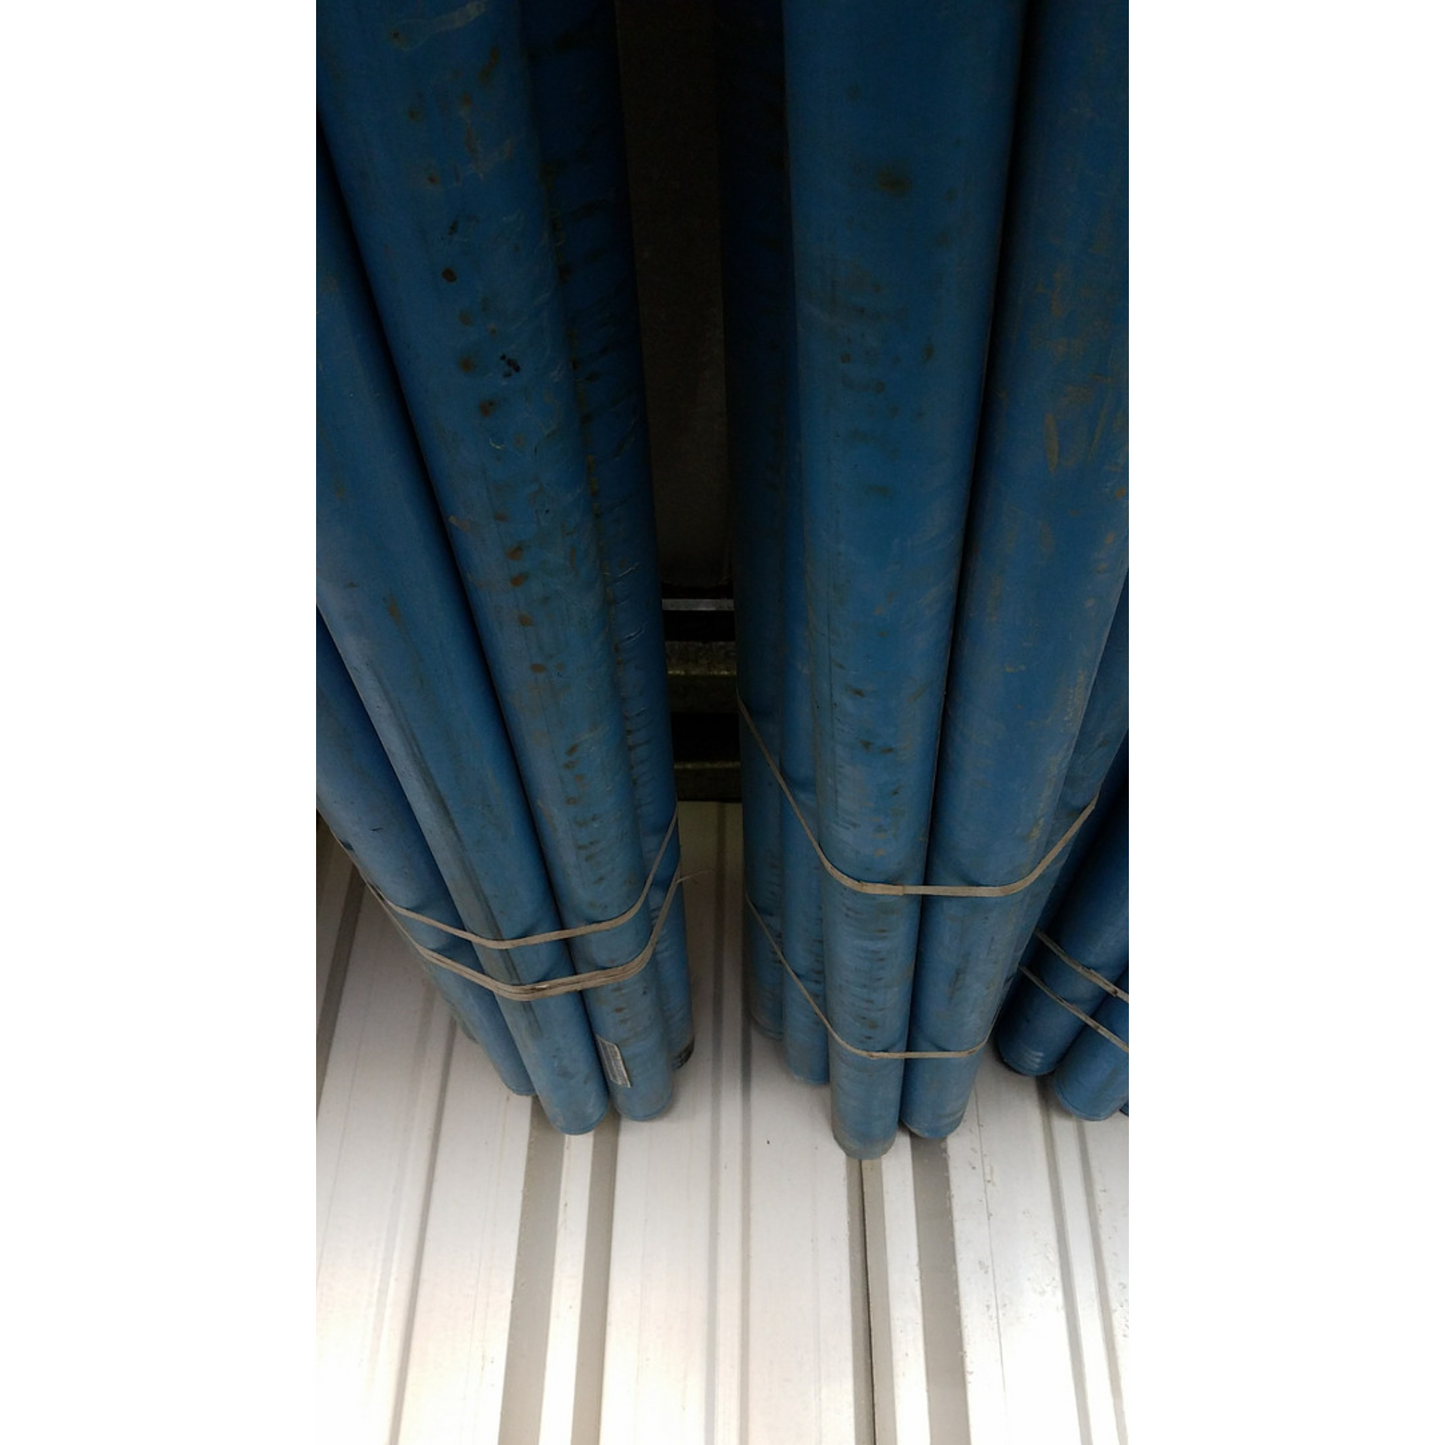 2 in Polypropylene Pipe,  Blueline FRPP SCH 40